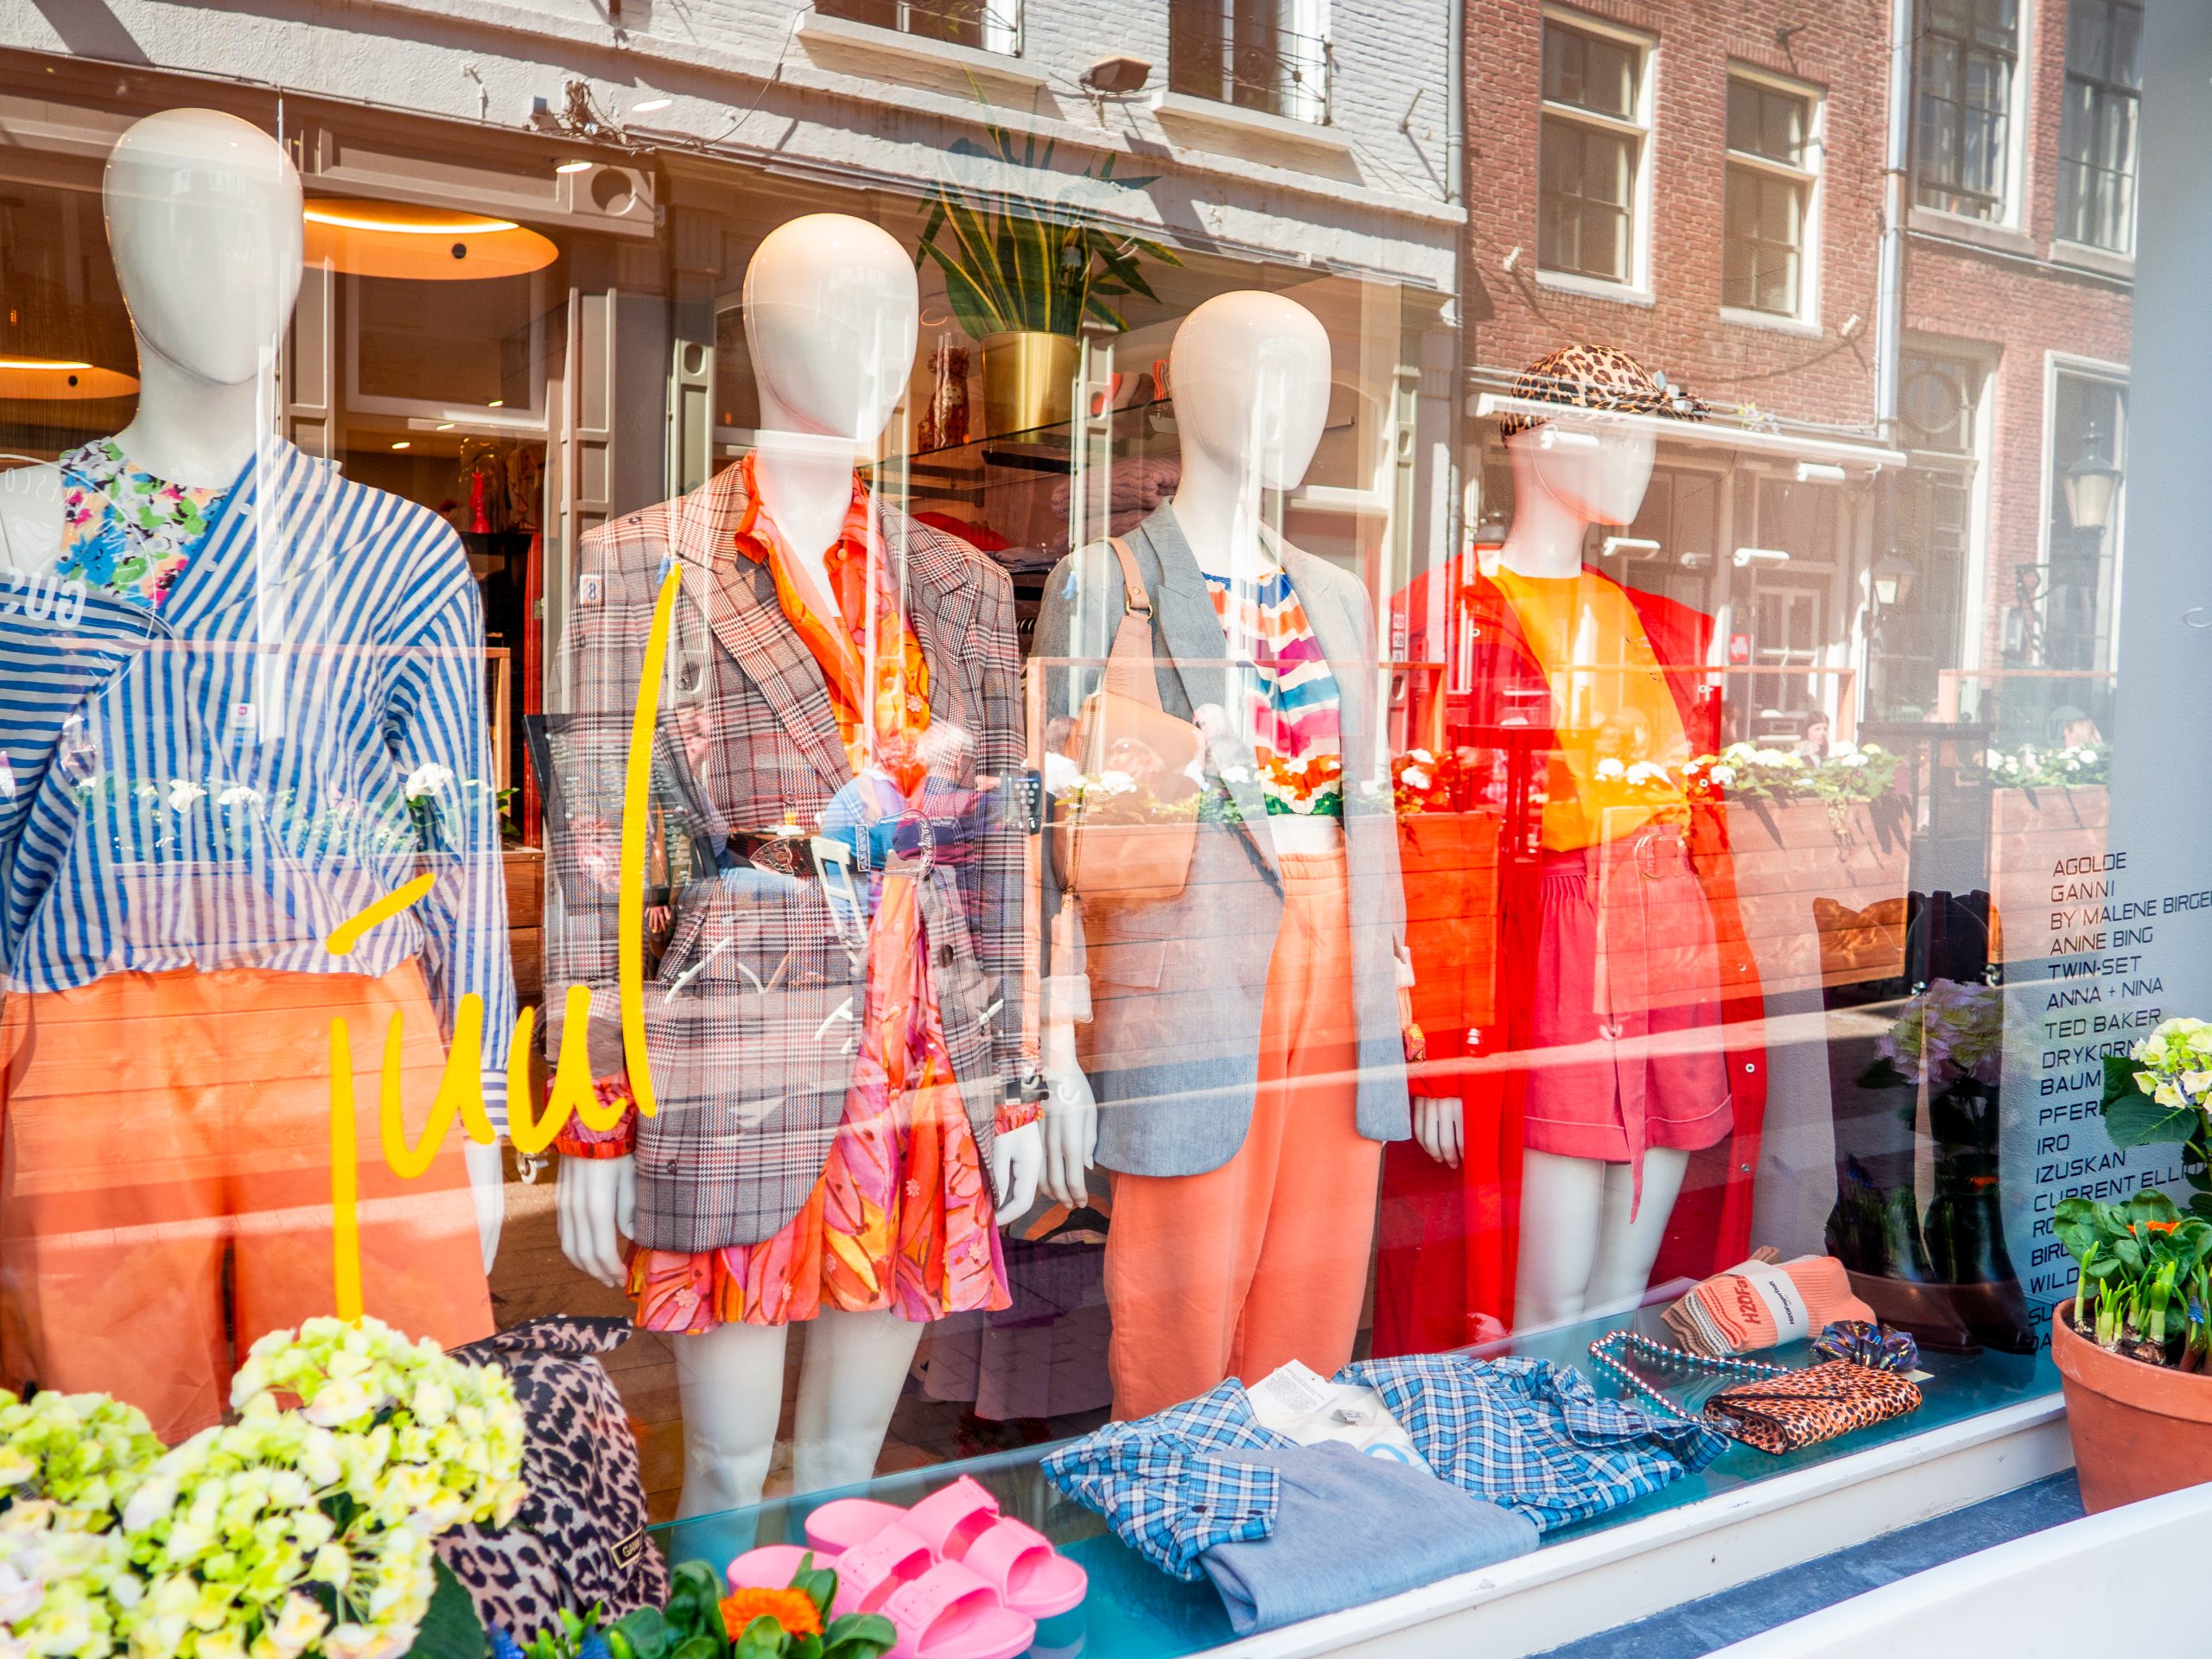 Dwaal Nadenkend bijvoeglijk naamwoord shoproute: 10x leuk kleding shoppen in Den Bosch